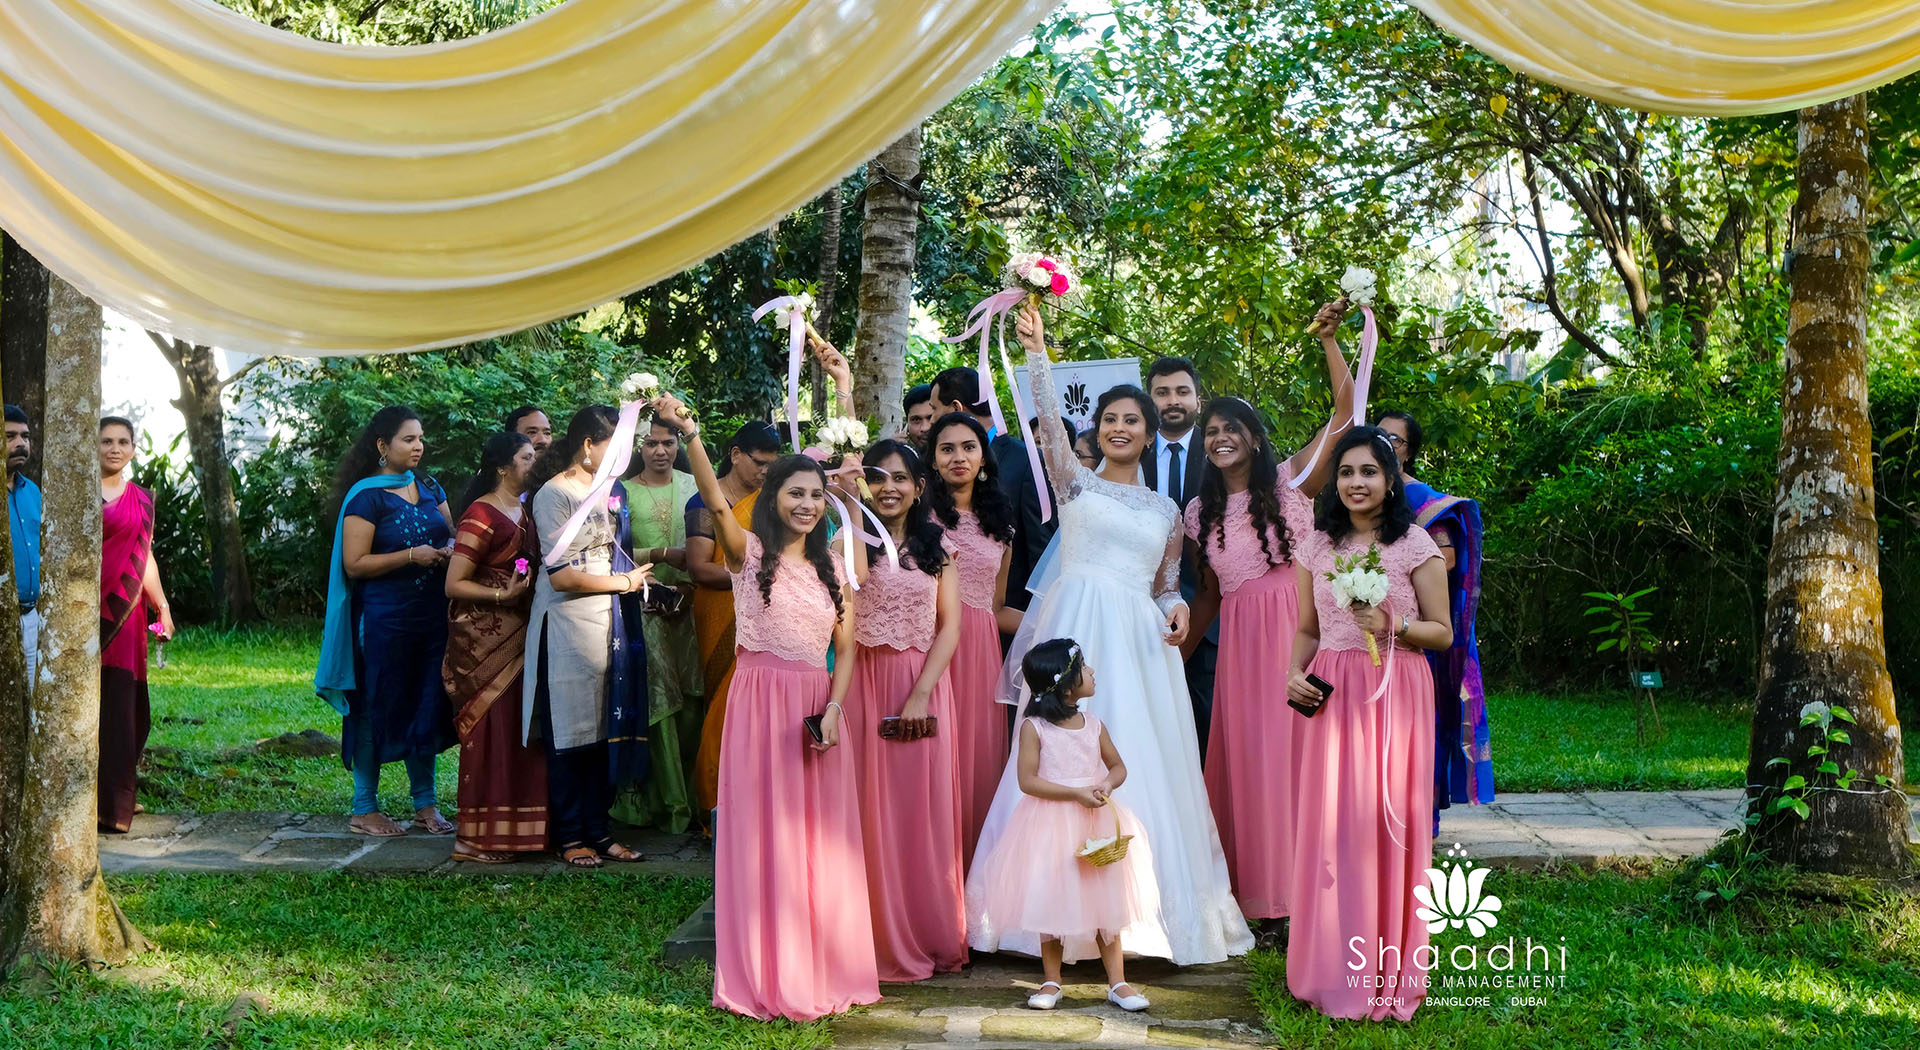 The Traditional Kerala Wedding Attire |